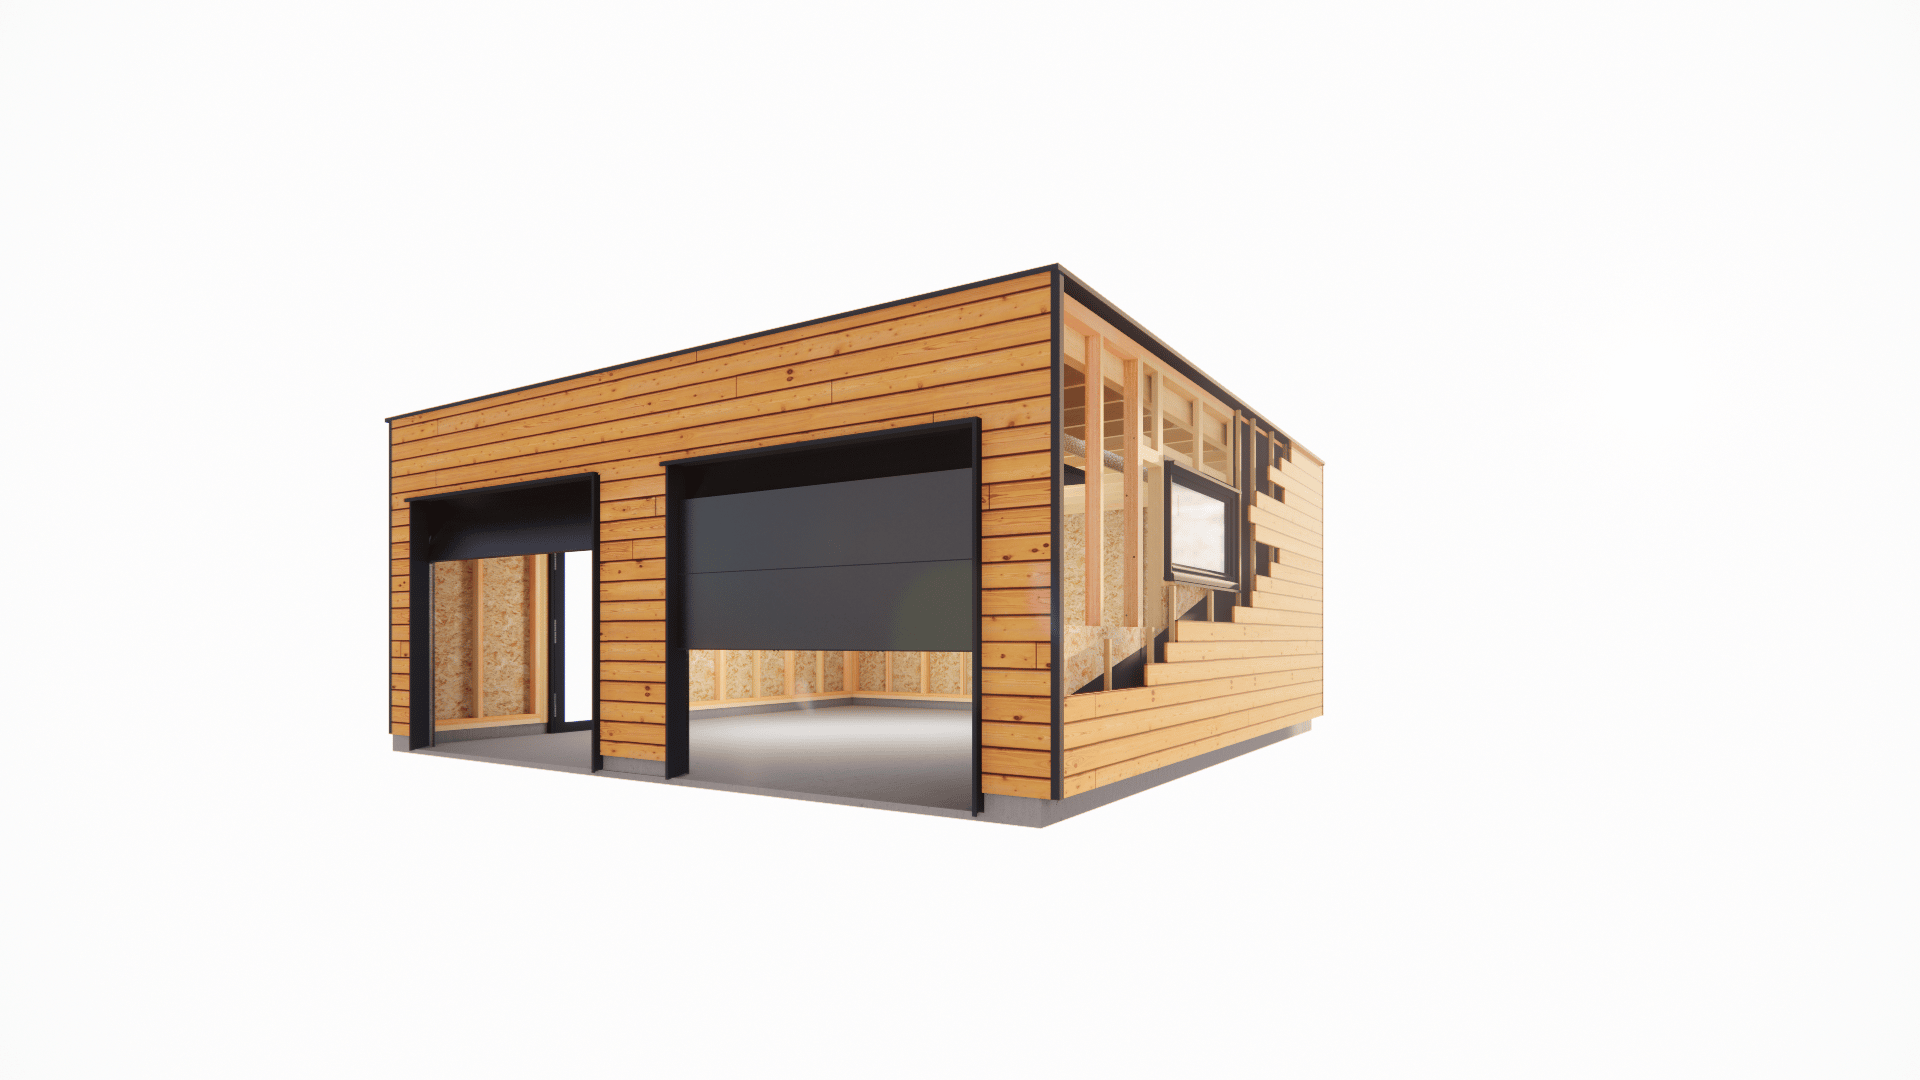 Garage en bois en kit de 50 m²: double ou triple